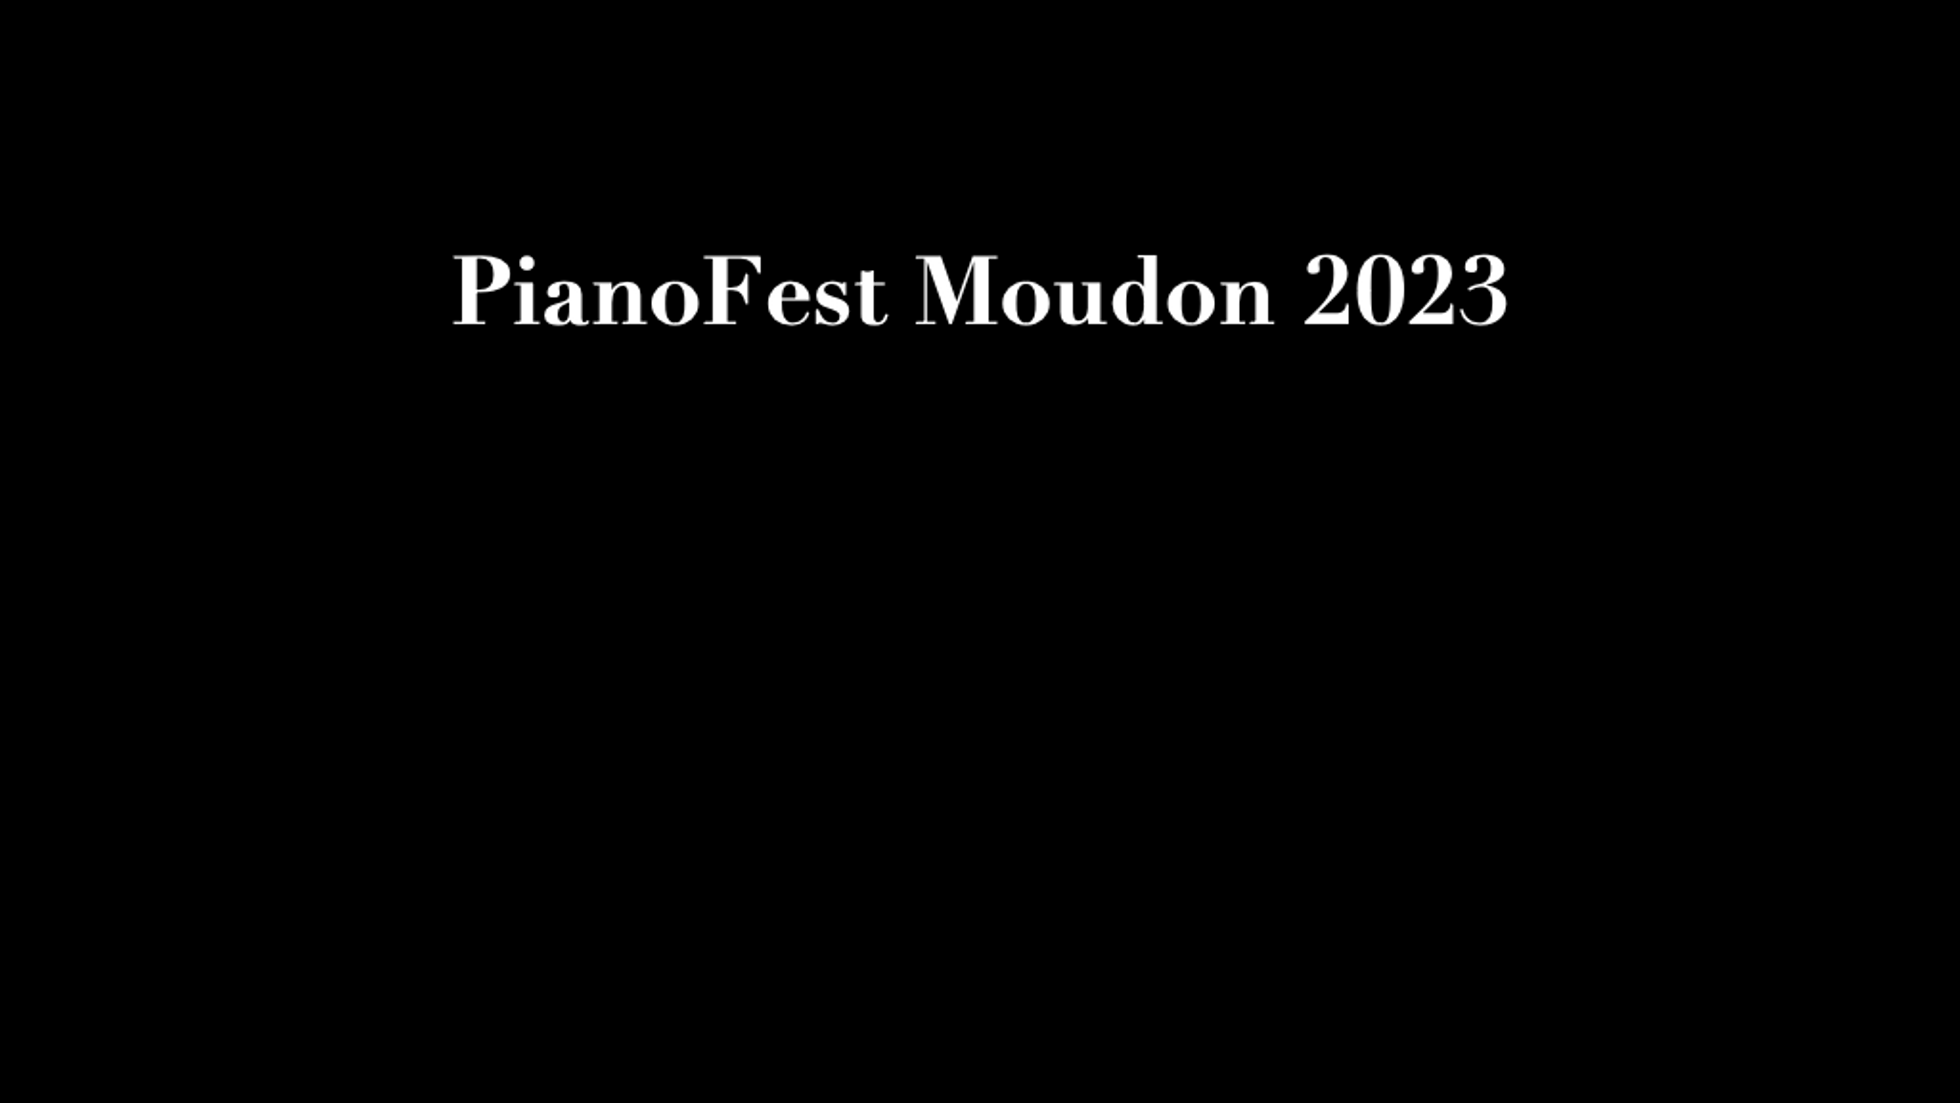 PianoFest Moudon 2023